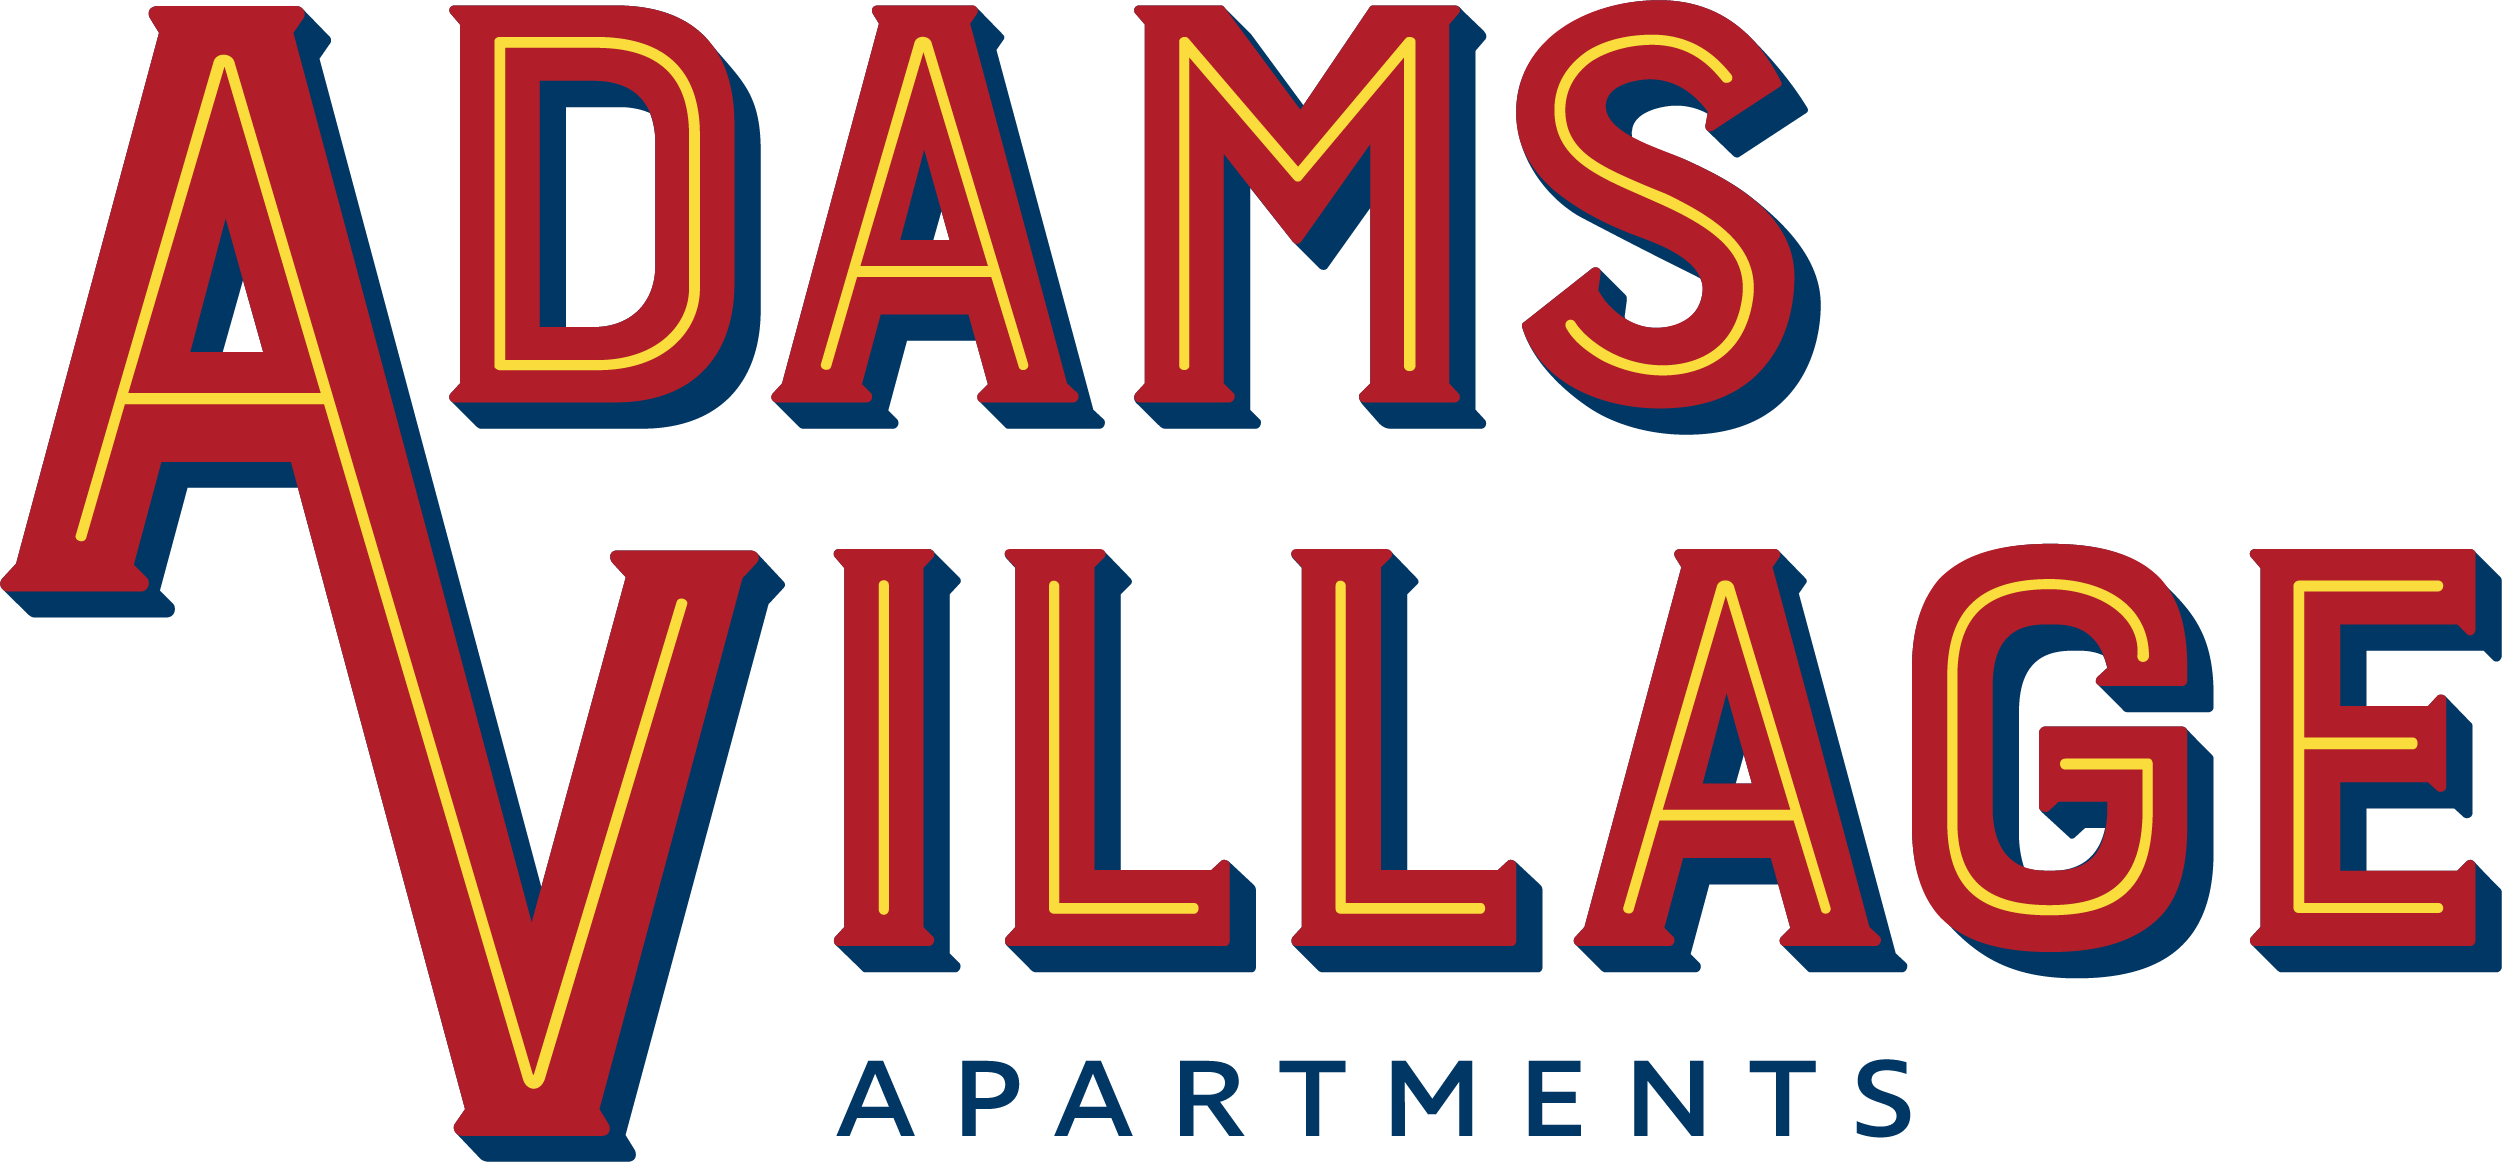 Regency - Adams Village Apartments - Branding